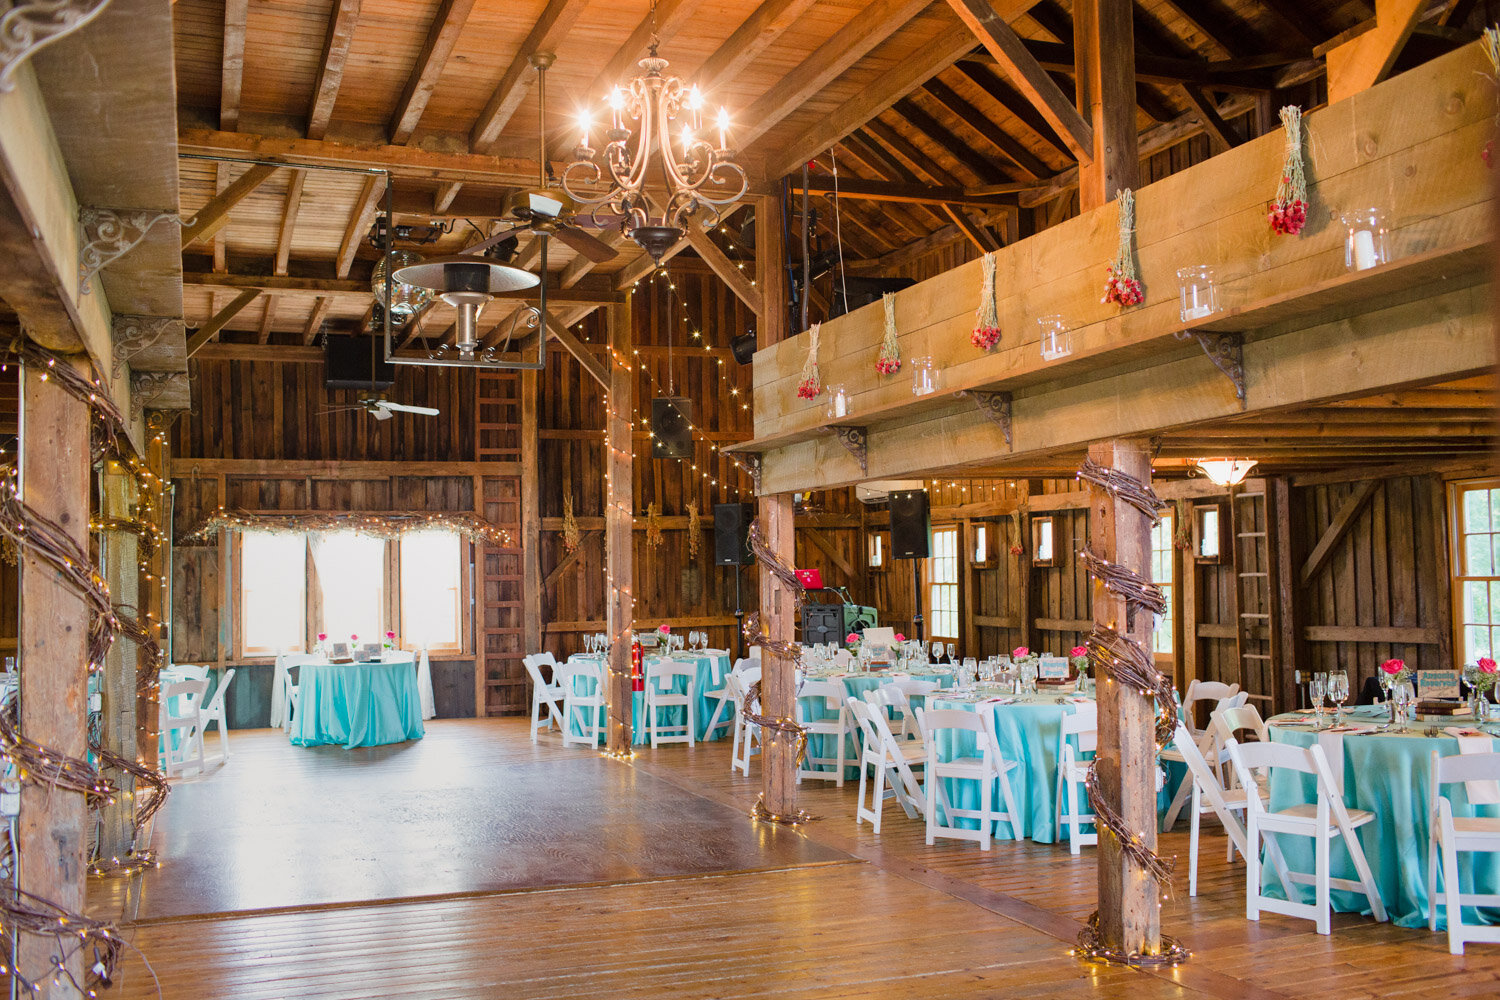 New-England-Barn-Wedding-Venues-13.jpg